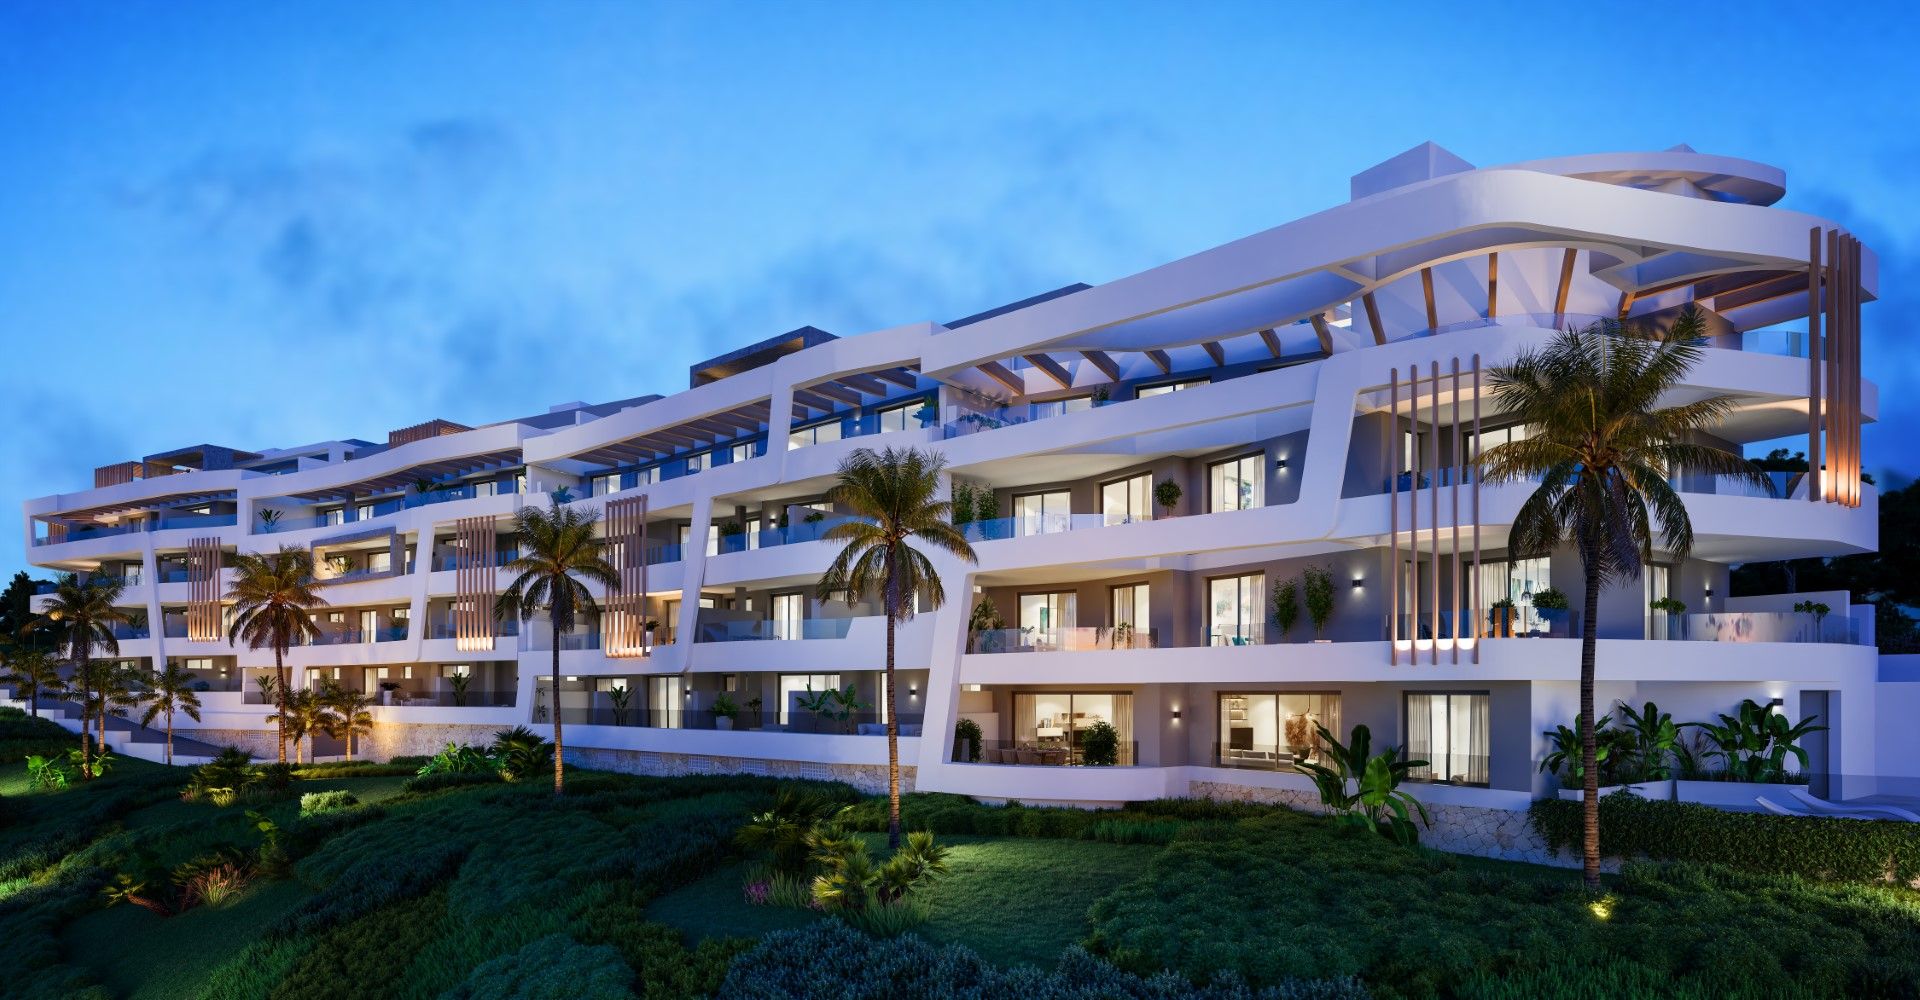 Spectacular luxury apartment project, Guadalmina Alta | Engel & Völkers Marbella